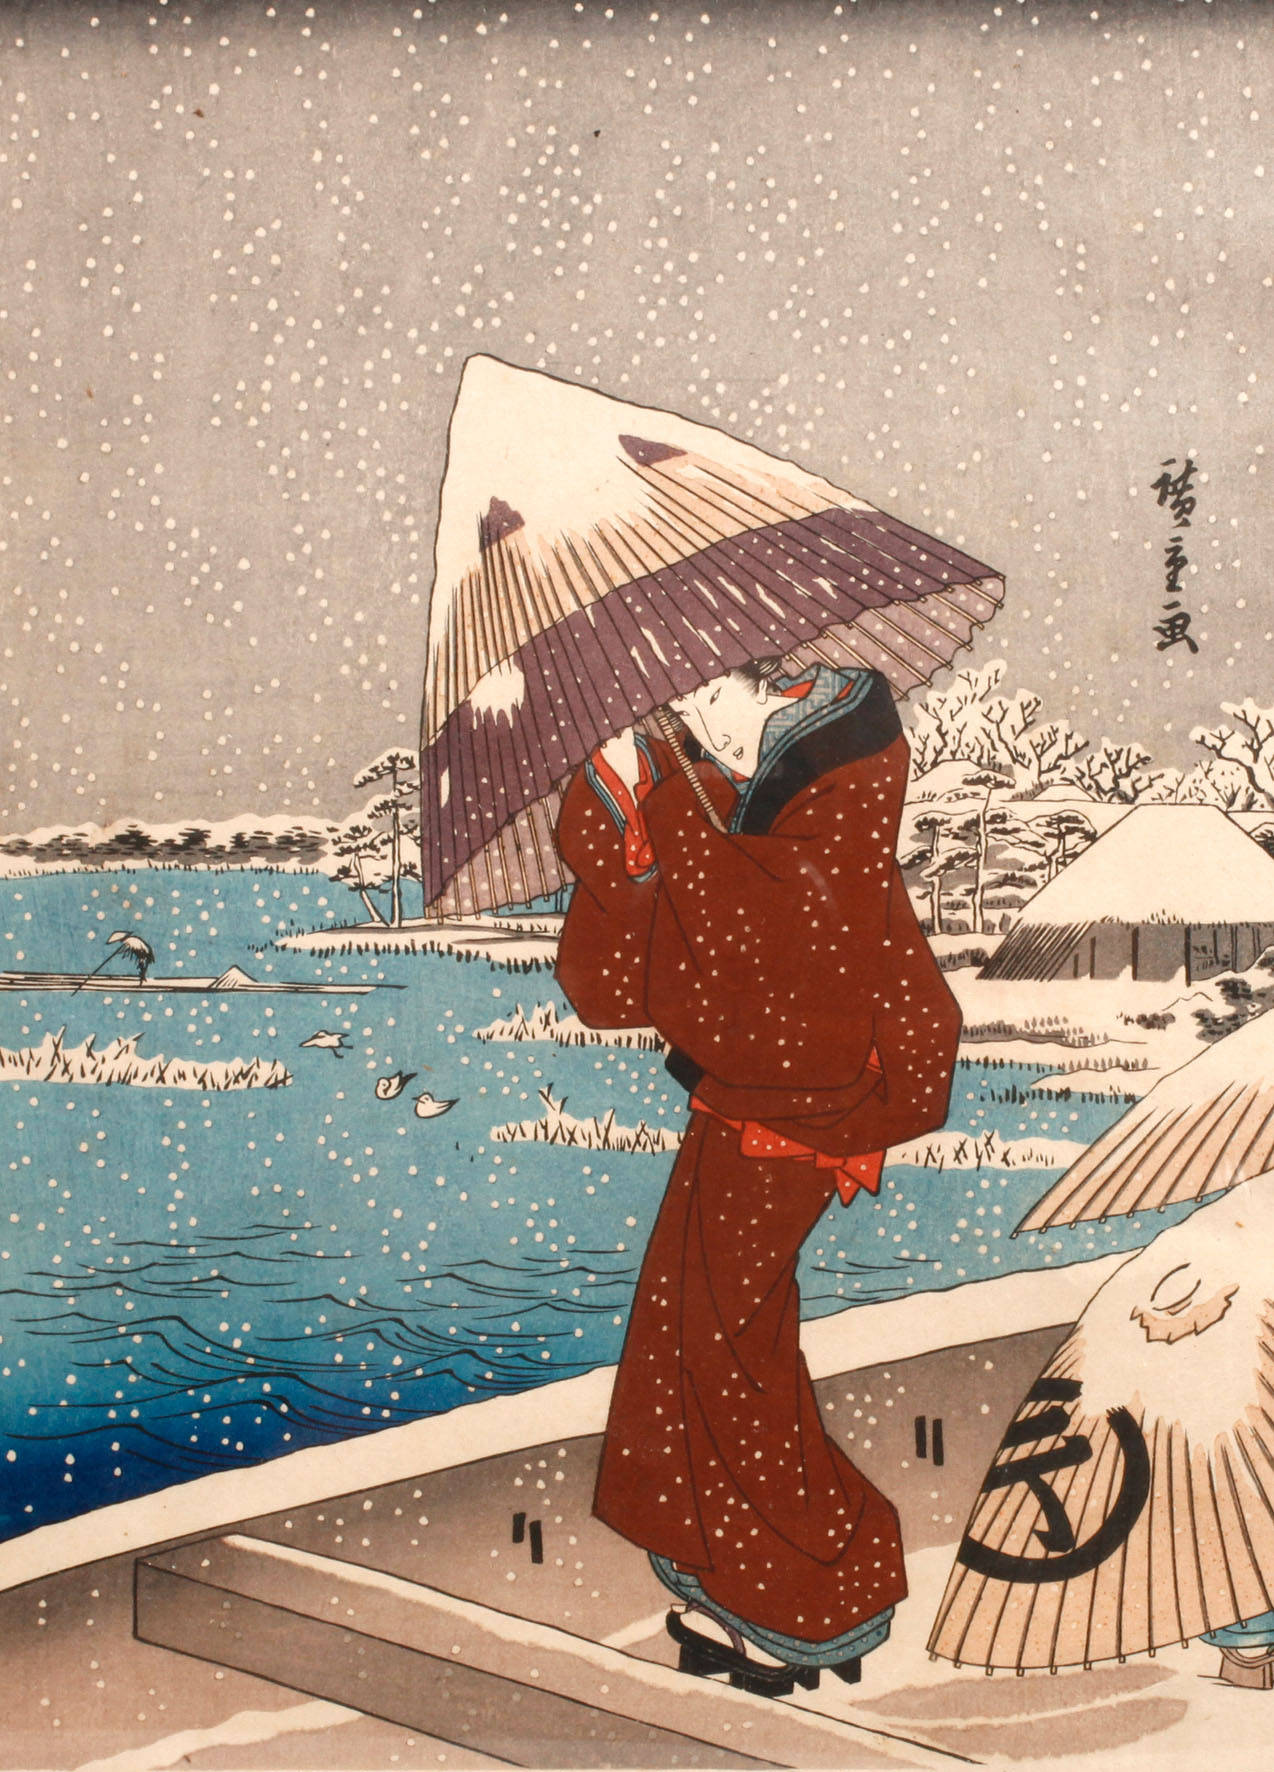 Utagawa Hiroshige, Farbholzschnitt